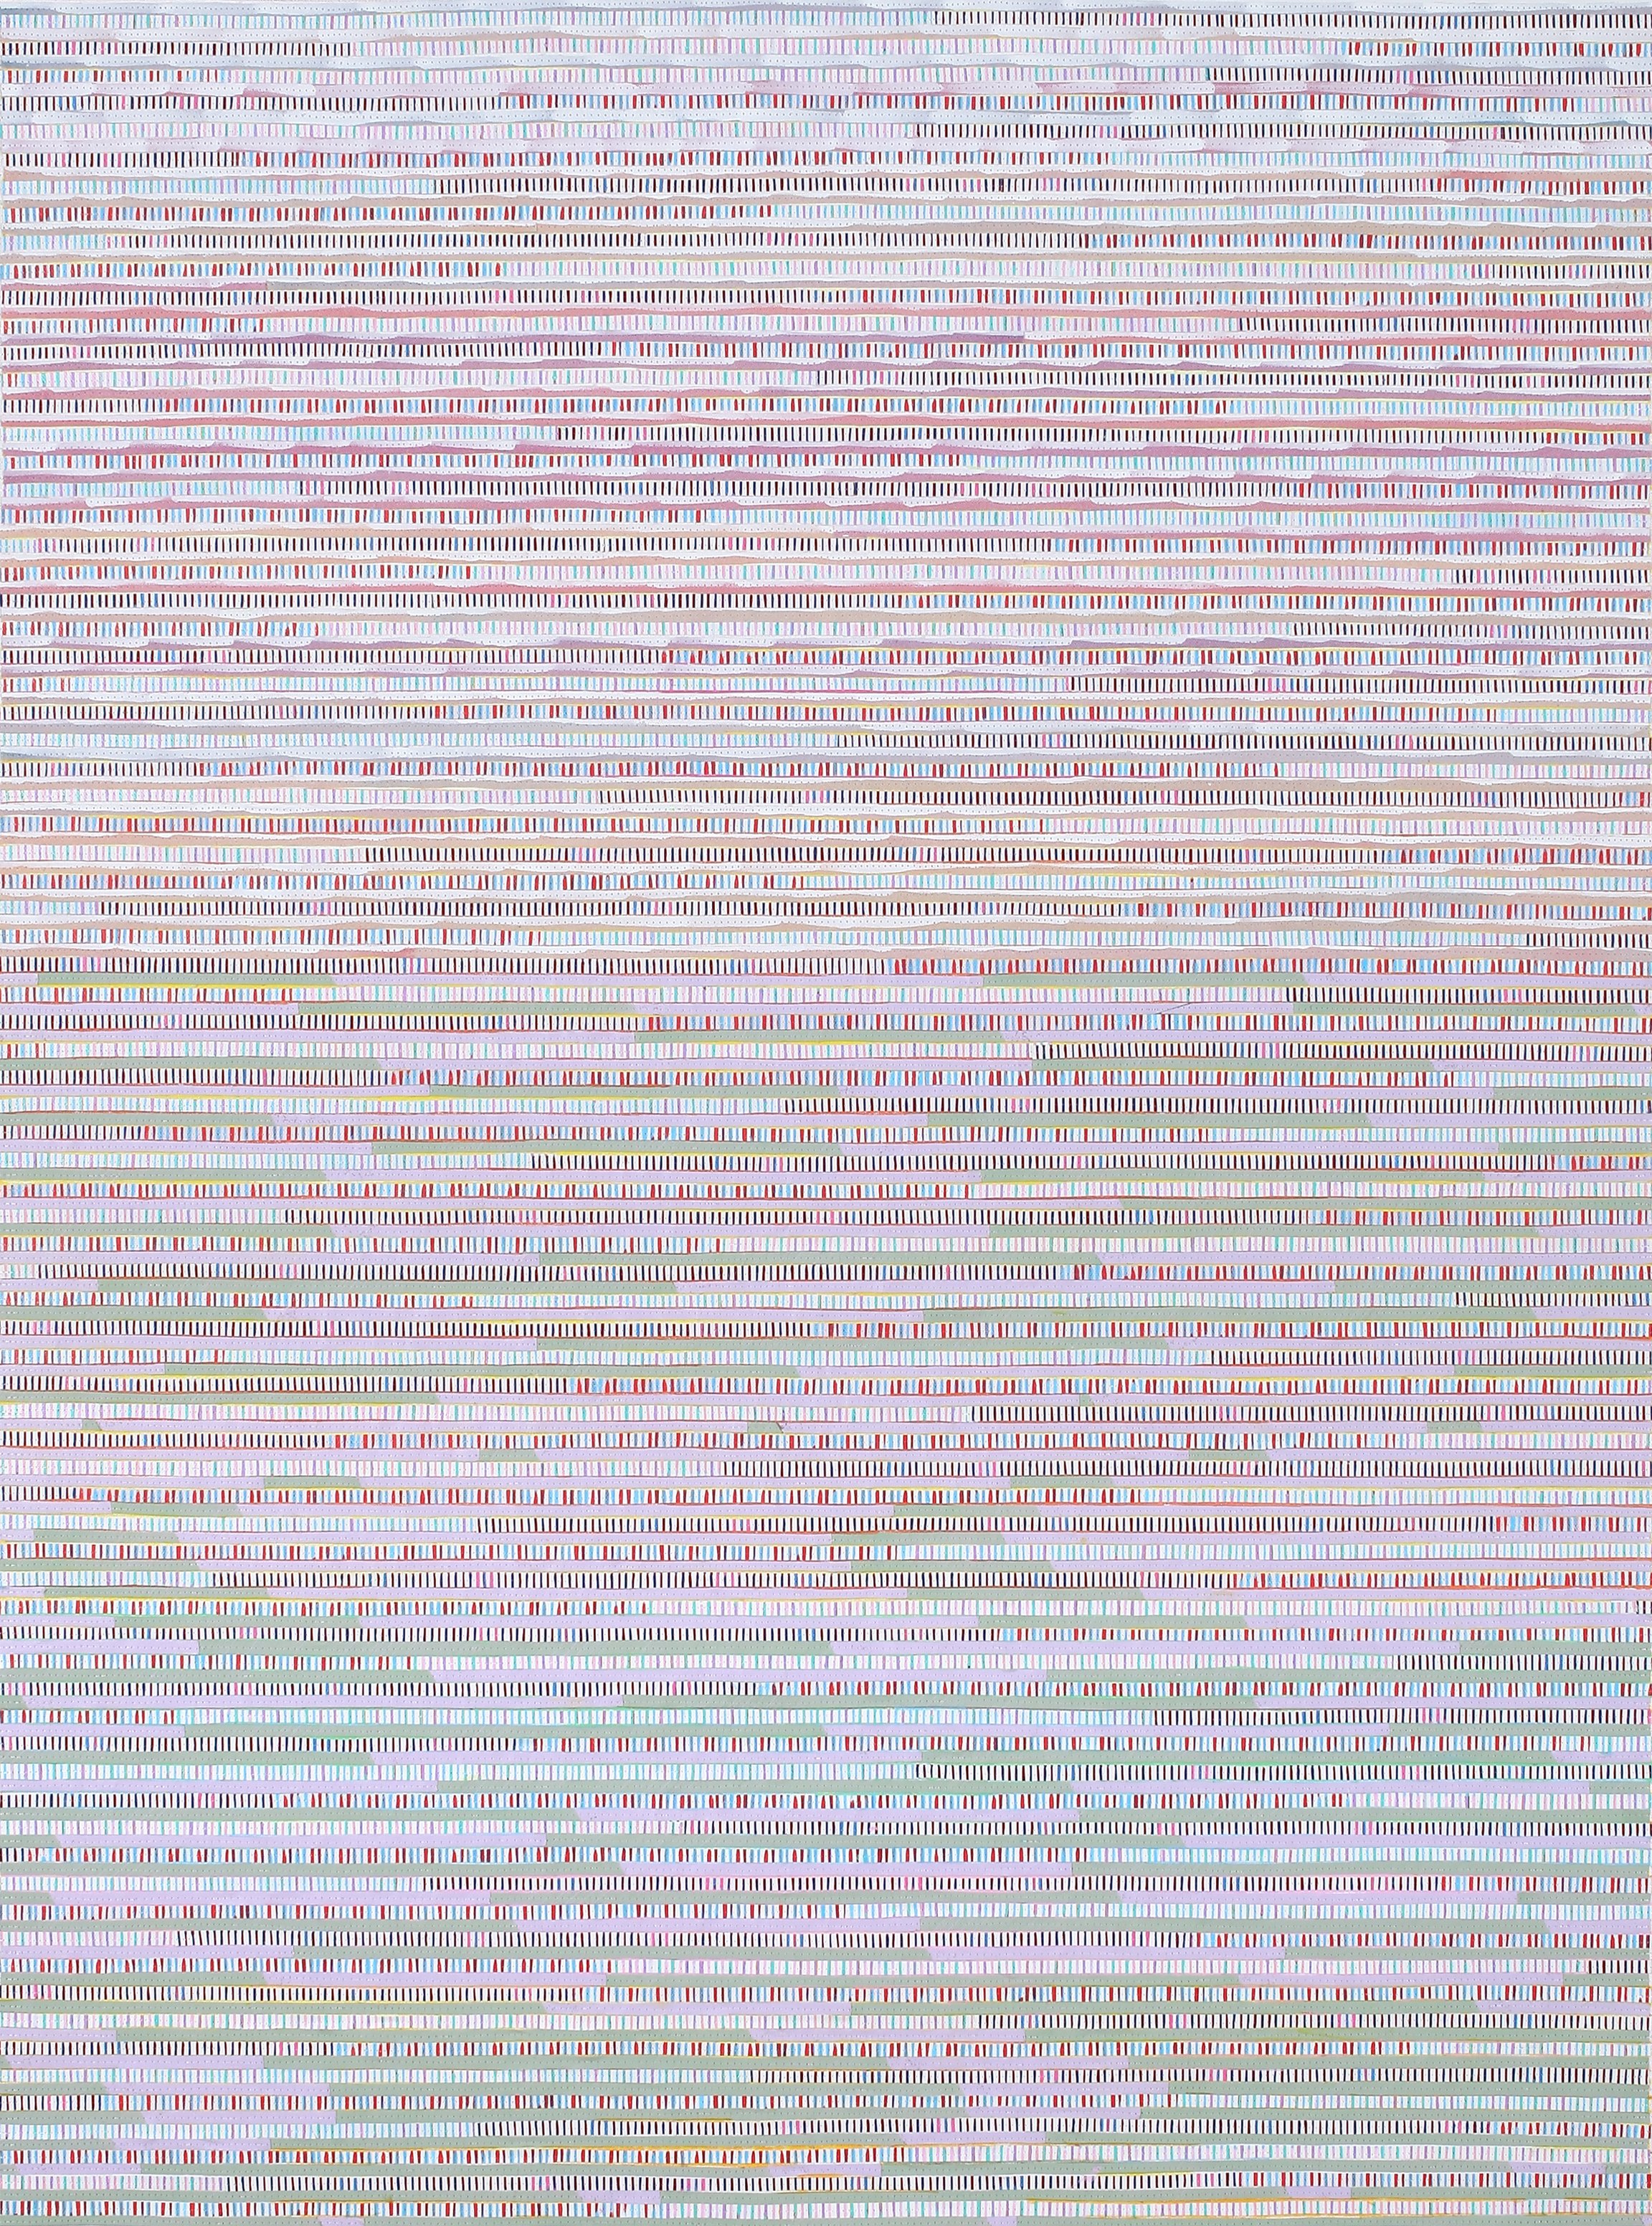 Horizons Unfurled 2, 2023, Acrylic, Mono-Poly thread on Canvas, 102.5 x 76cm